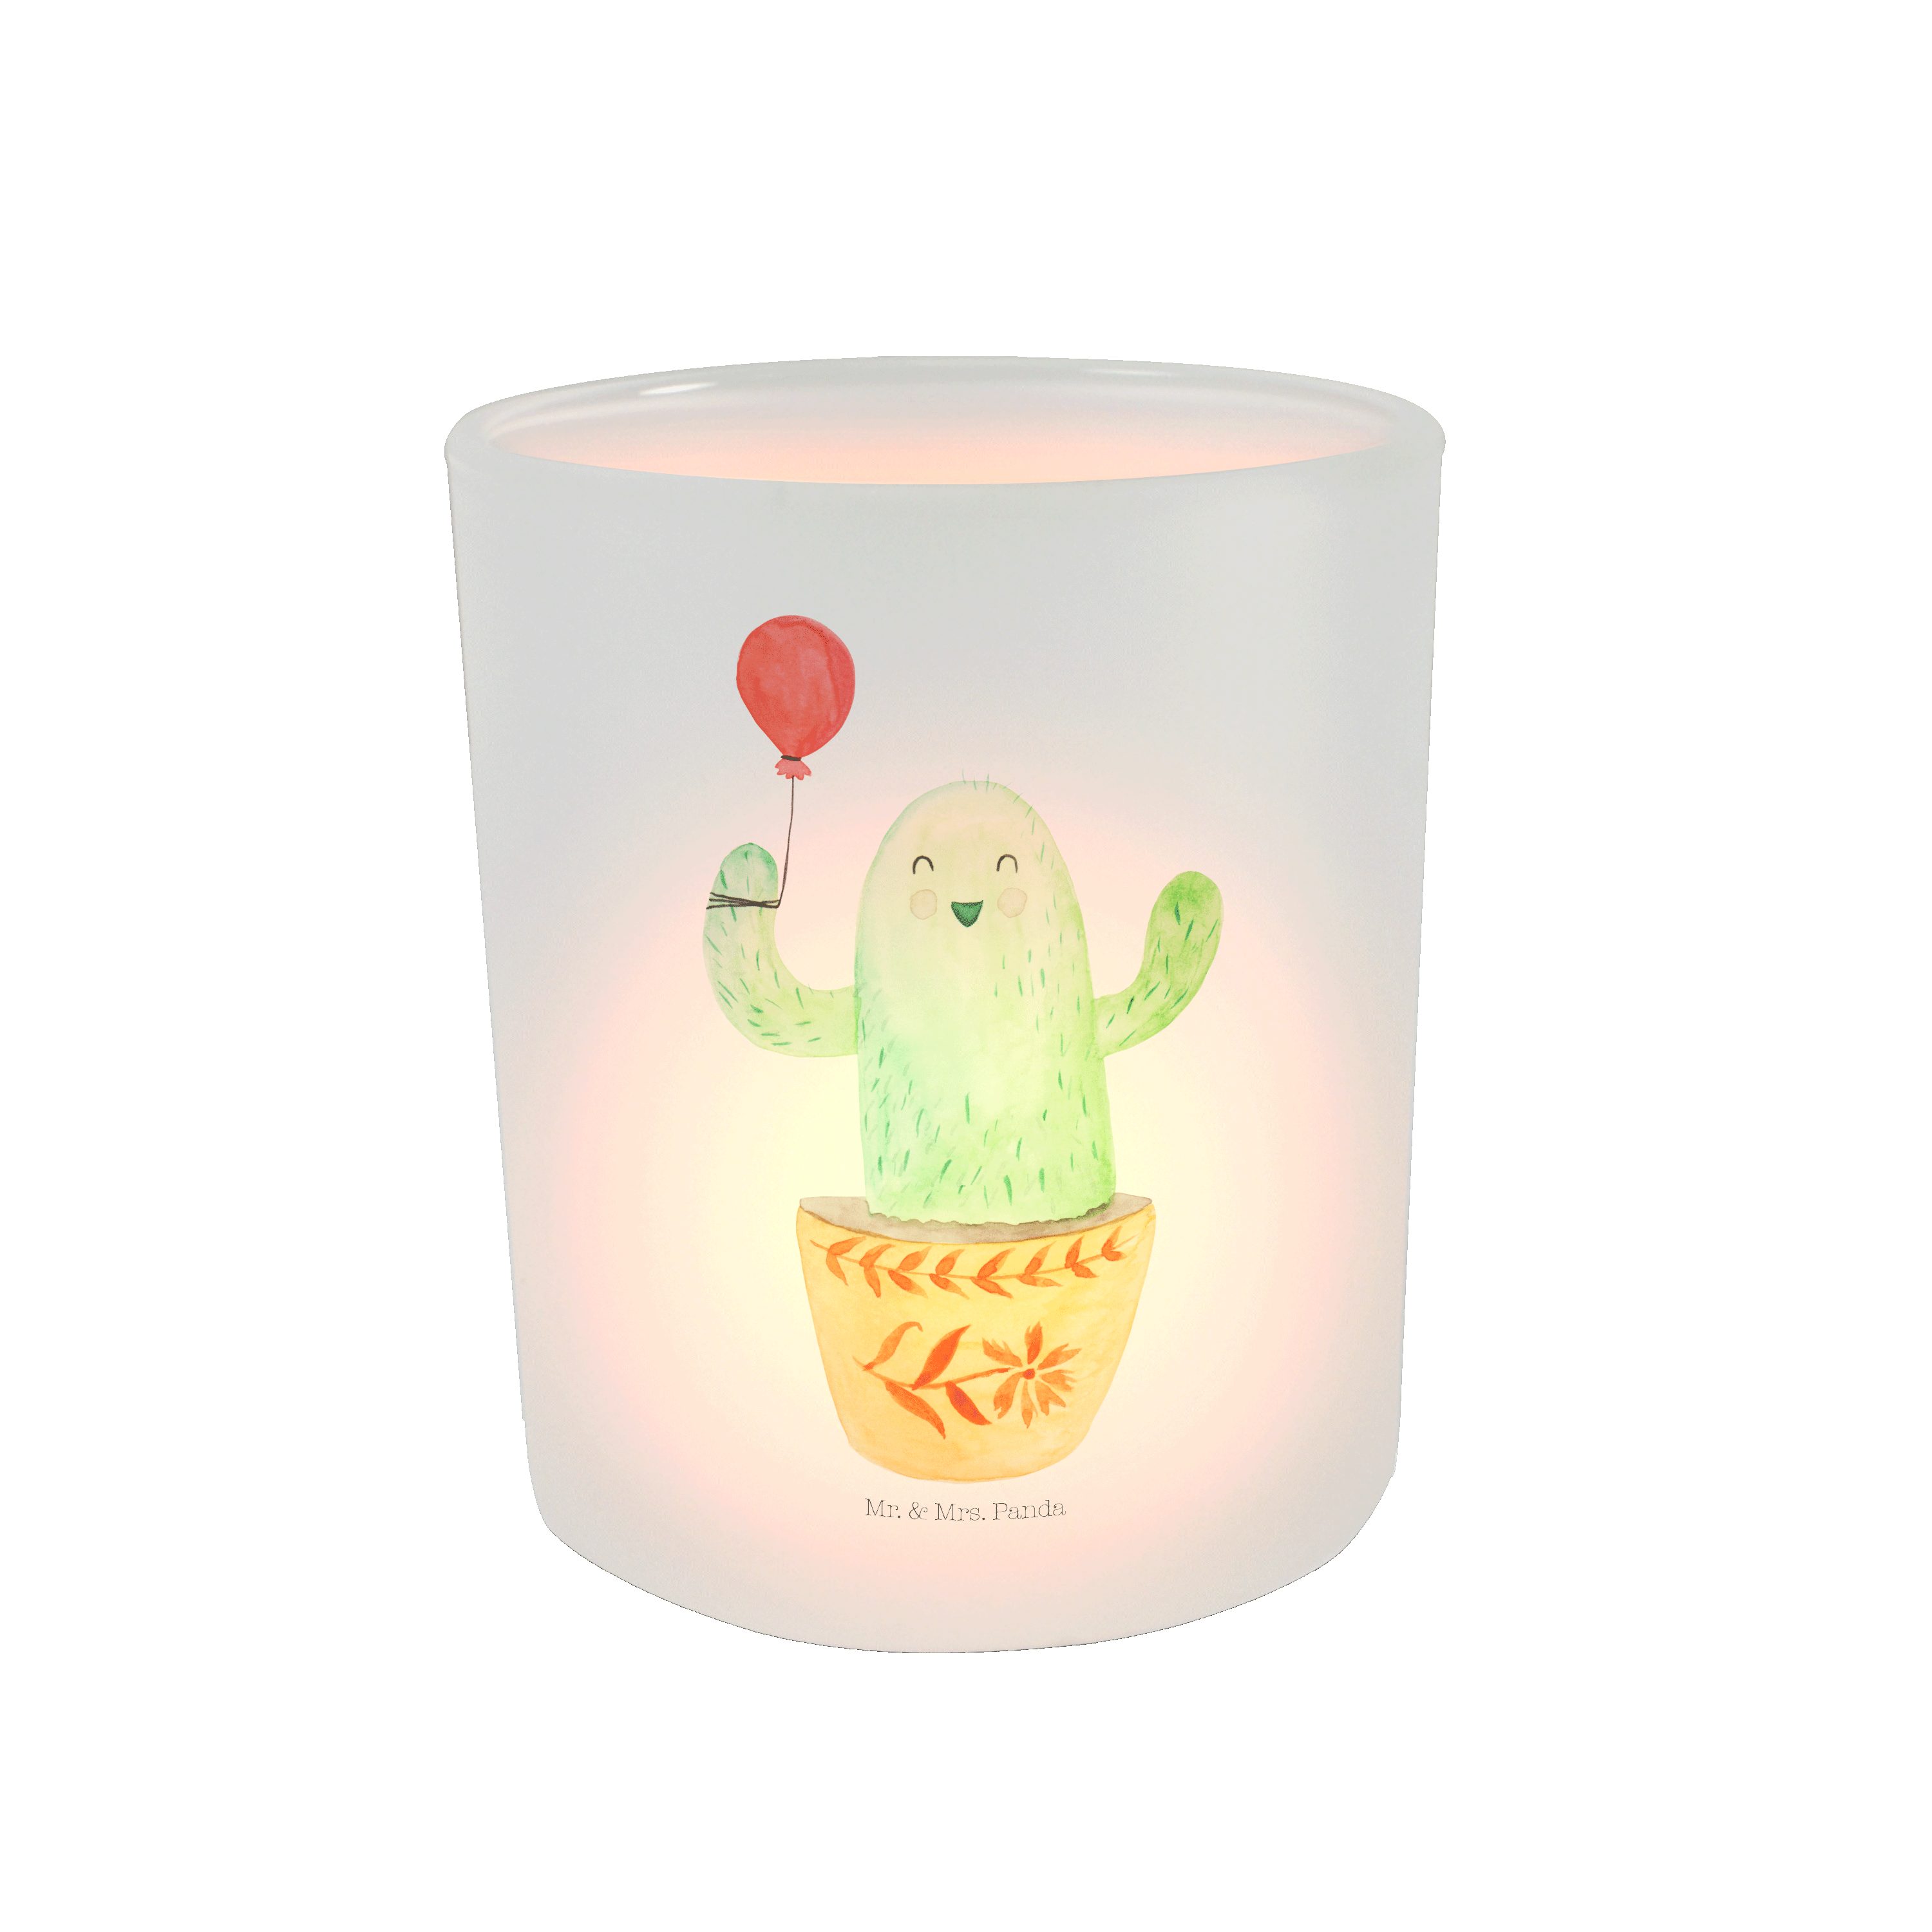 Mr. & Mrs. Panda Windlicht - - Teelic Büro, Kaktus Geschenk, Transparent (1 Kerzenlicht, St) Luftballon